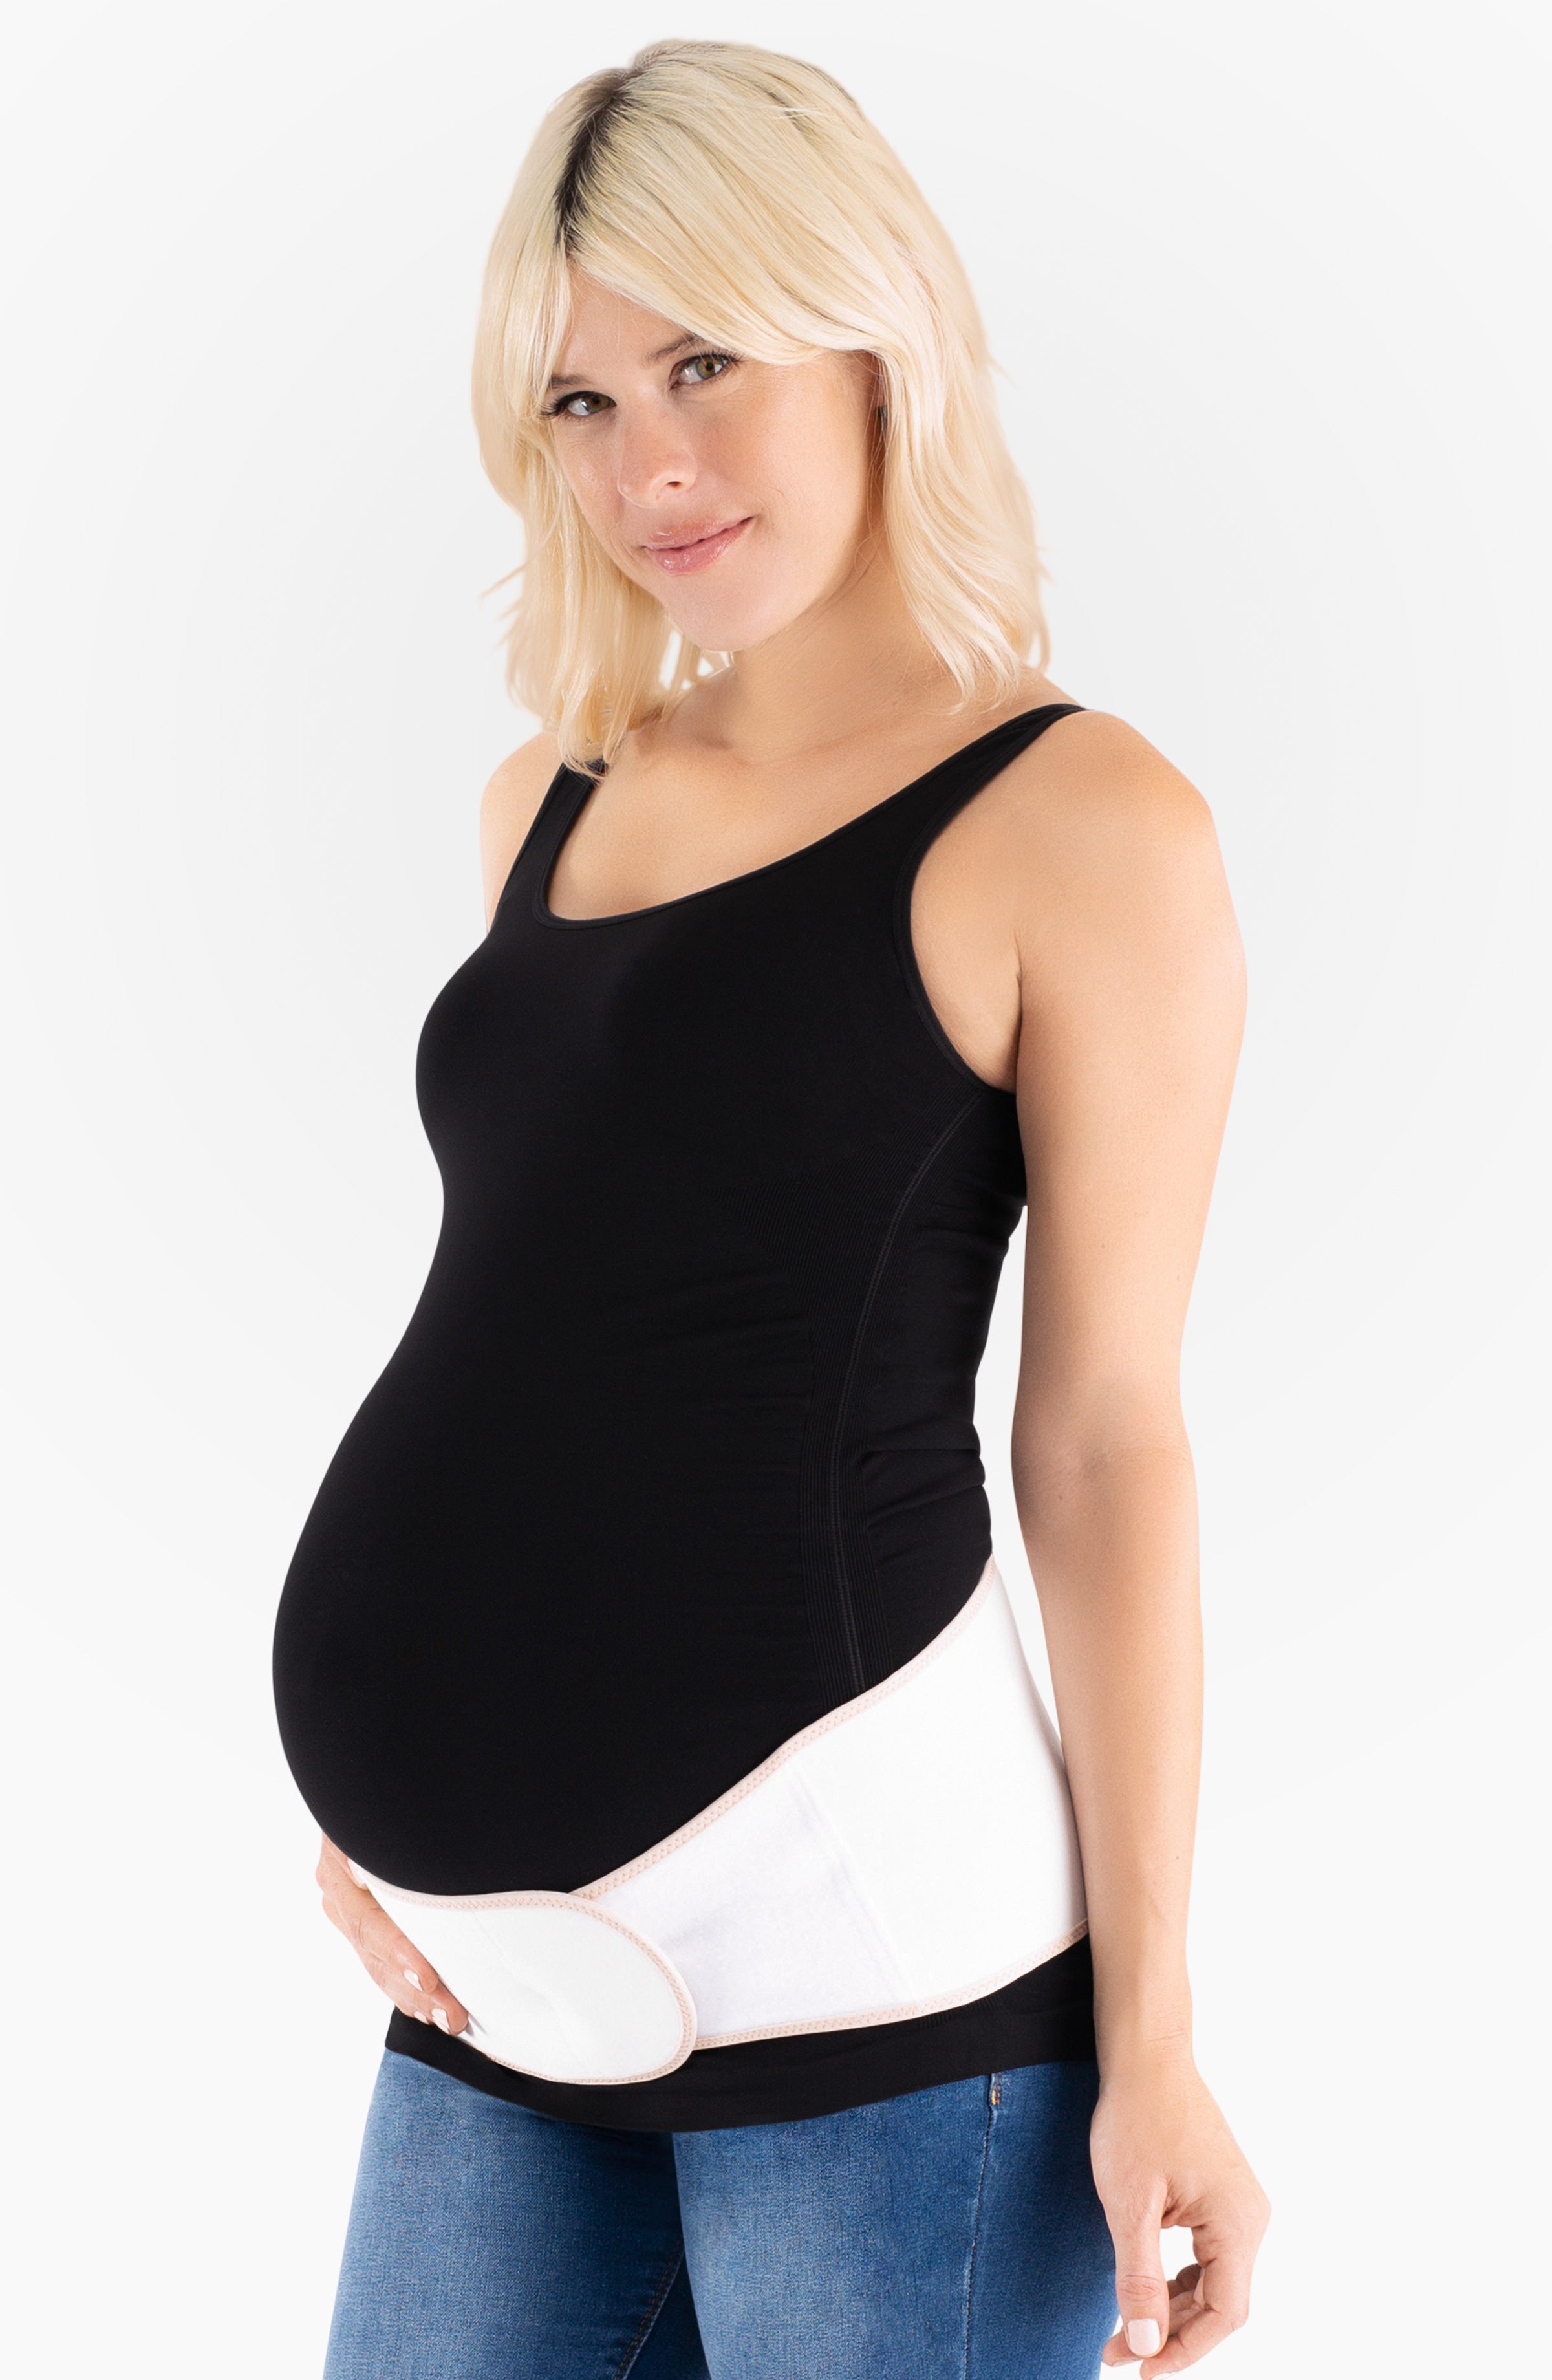 Maternity Comfort Kit – Belly Bandit